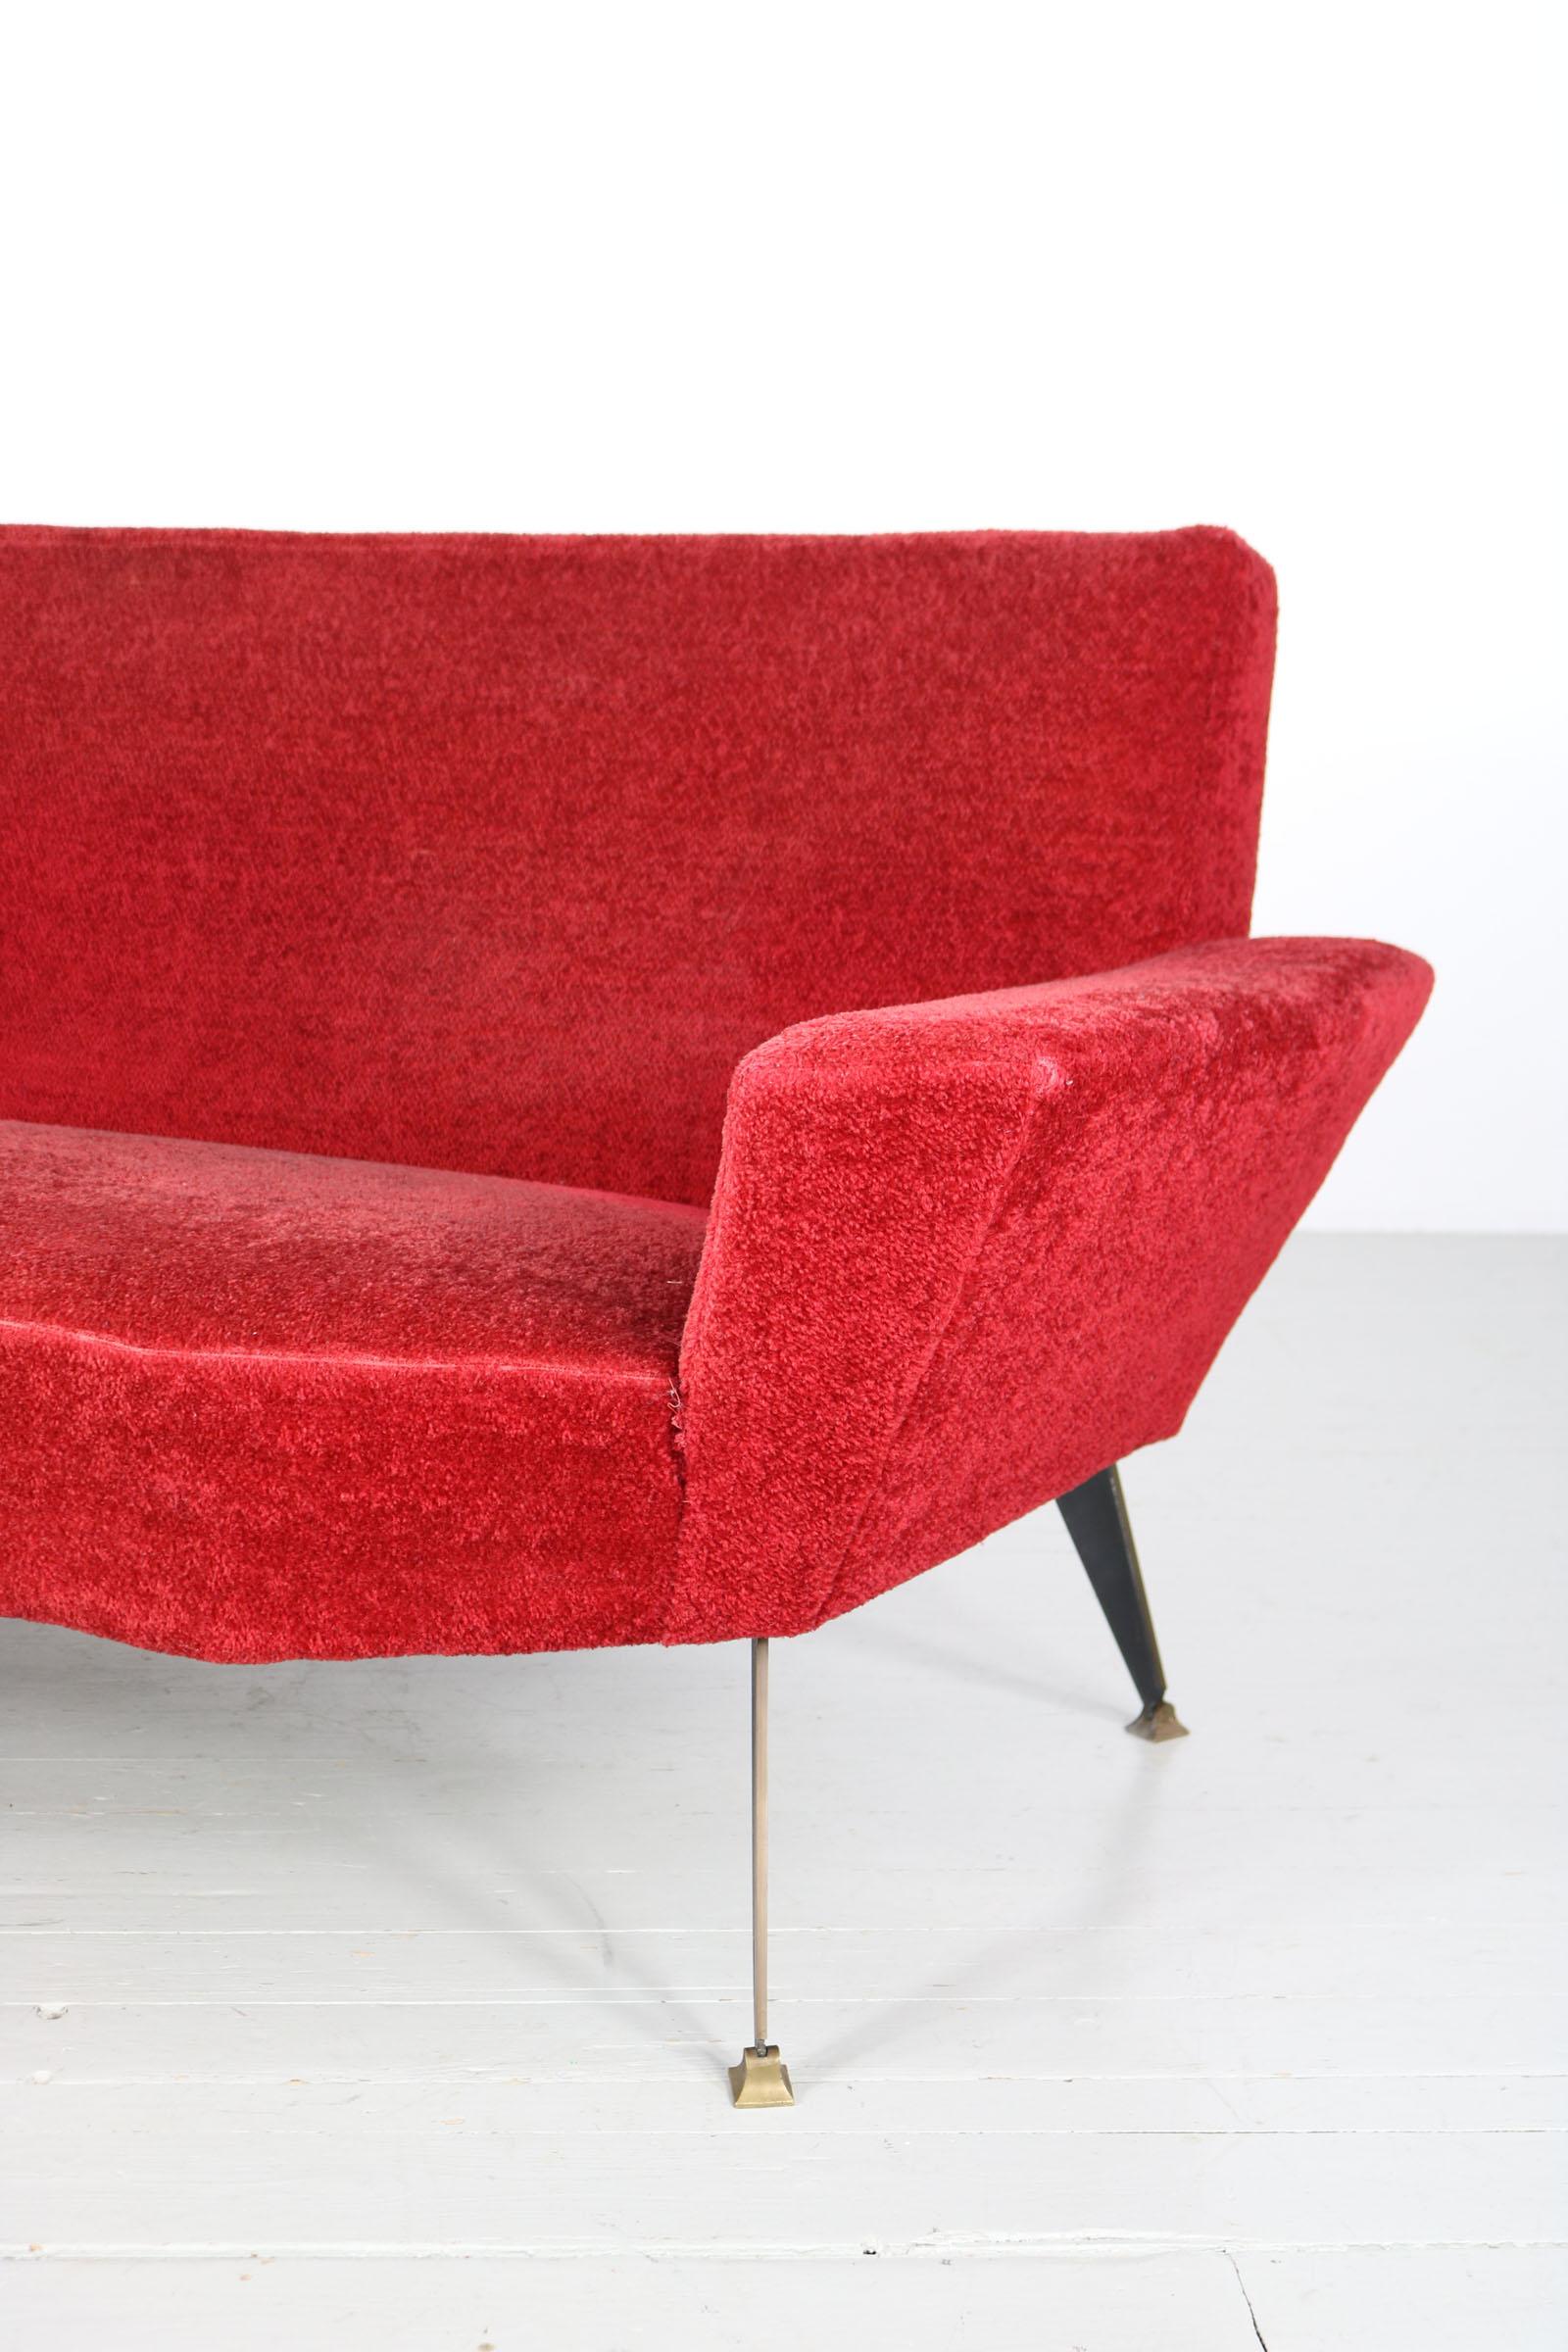 Italian 3 Seater Sofa from the 1950s, Design Lenzi, Studio Tecnico A.P.A. For Sale 1